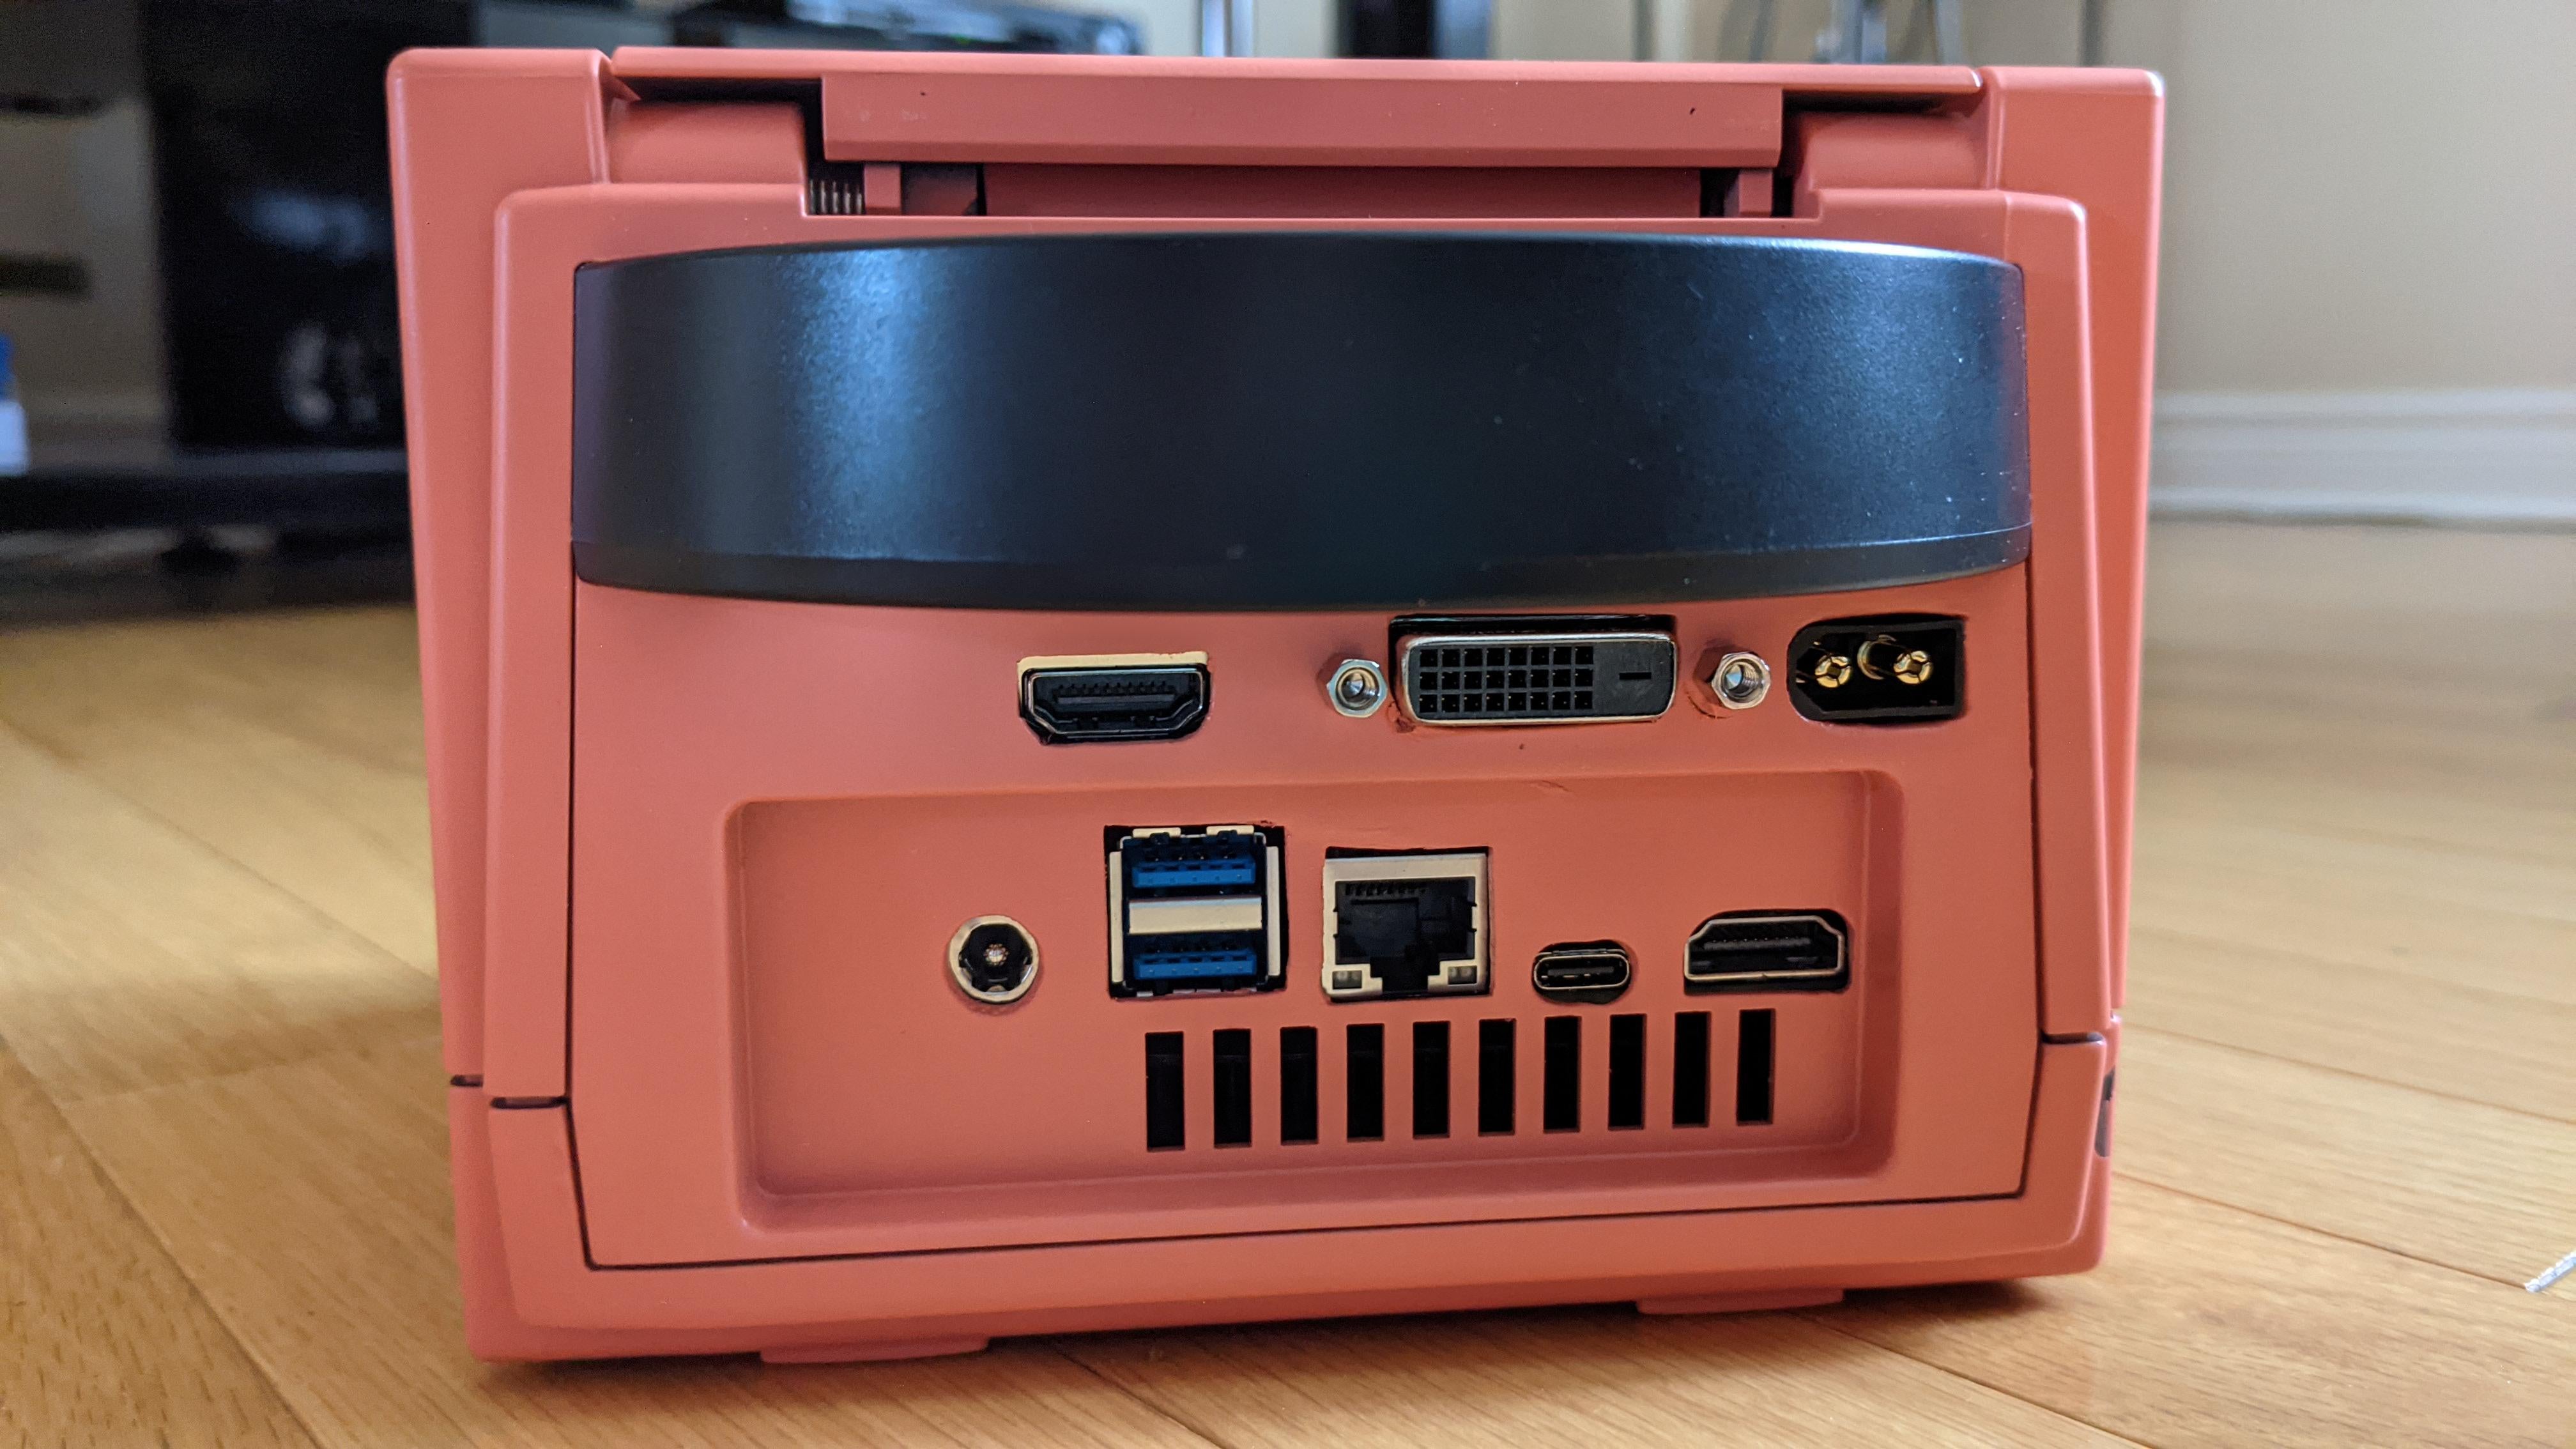 A peach Nintendo GameCube that's actually a custom mini PC build